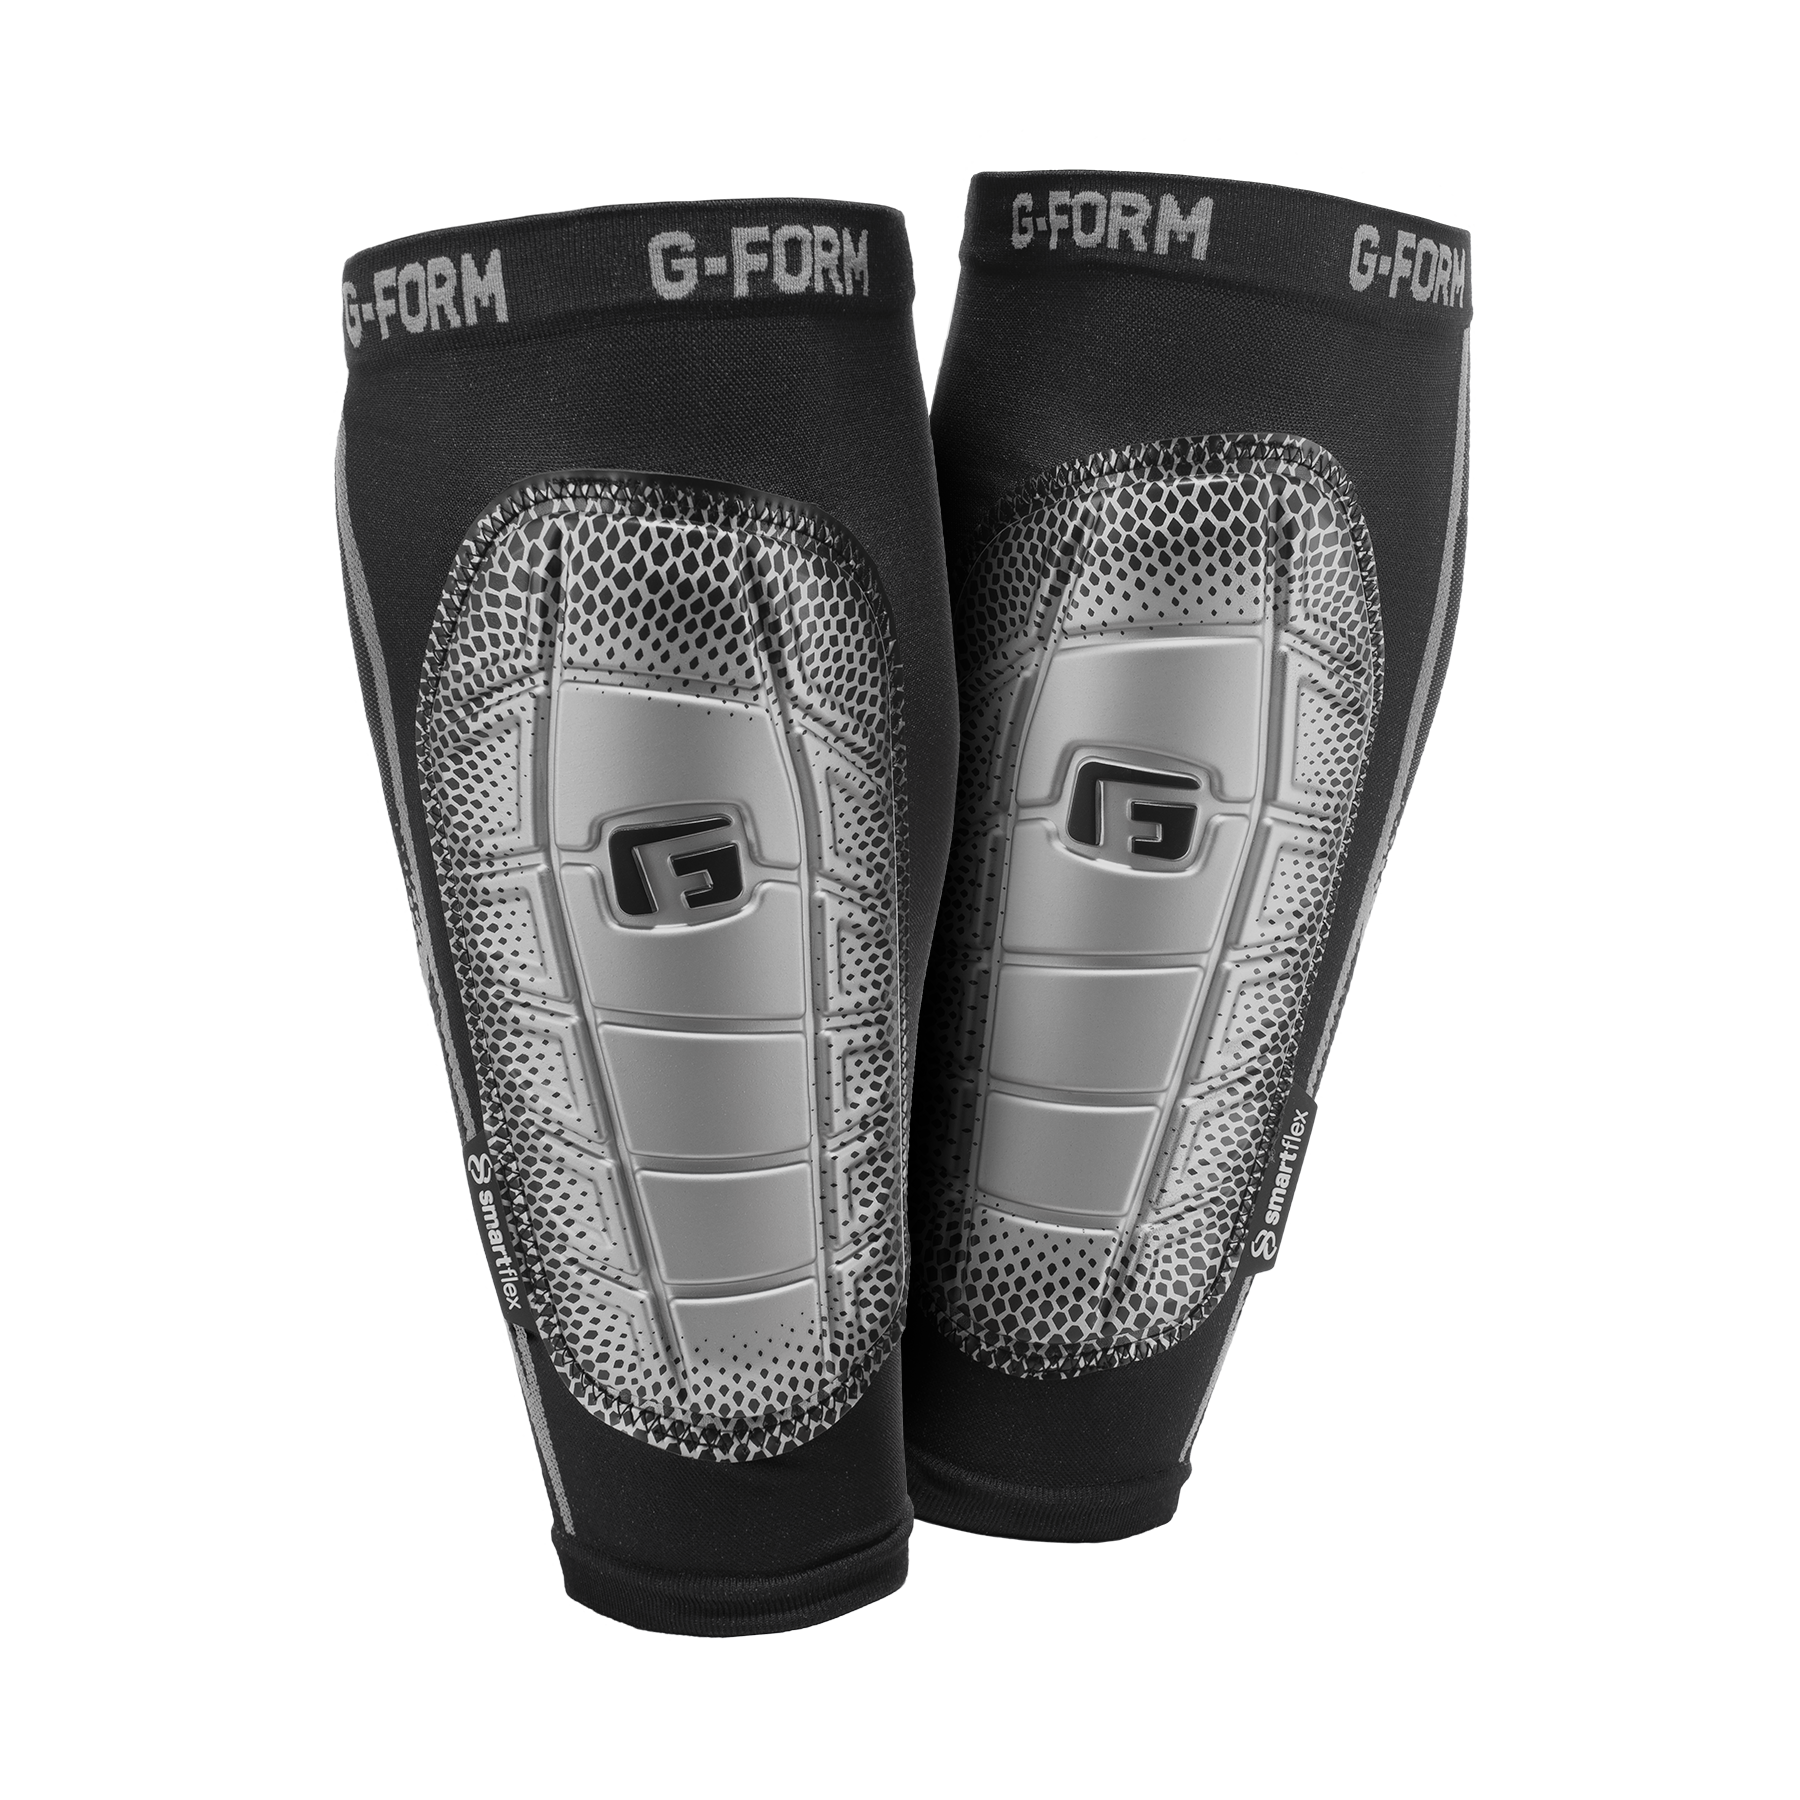 Elite 2 Shin Guard Soccer Premium Shin Pads Black Sleek Football Flexible Machine Washable Shin Pads Lightweight Adult